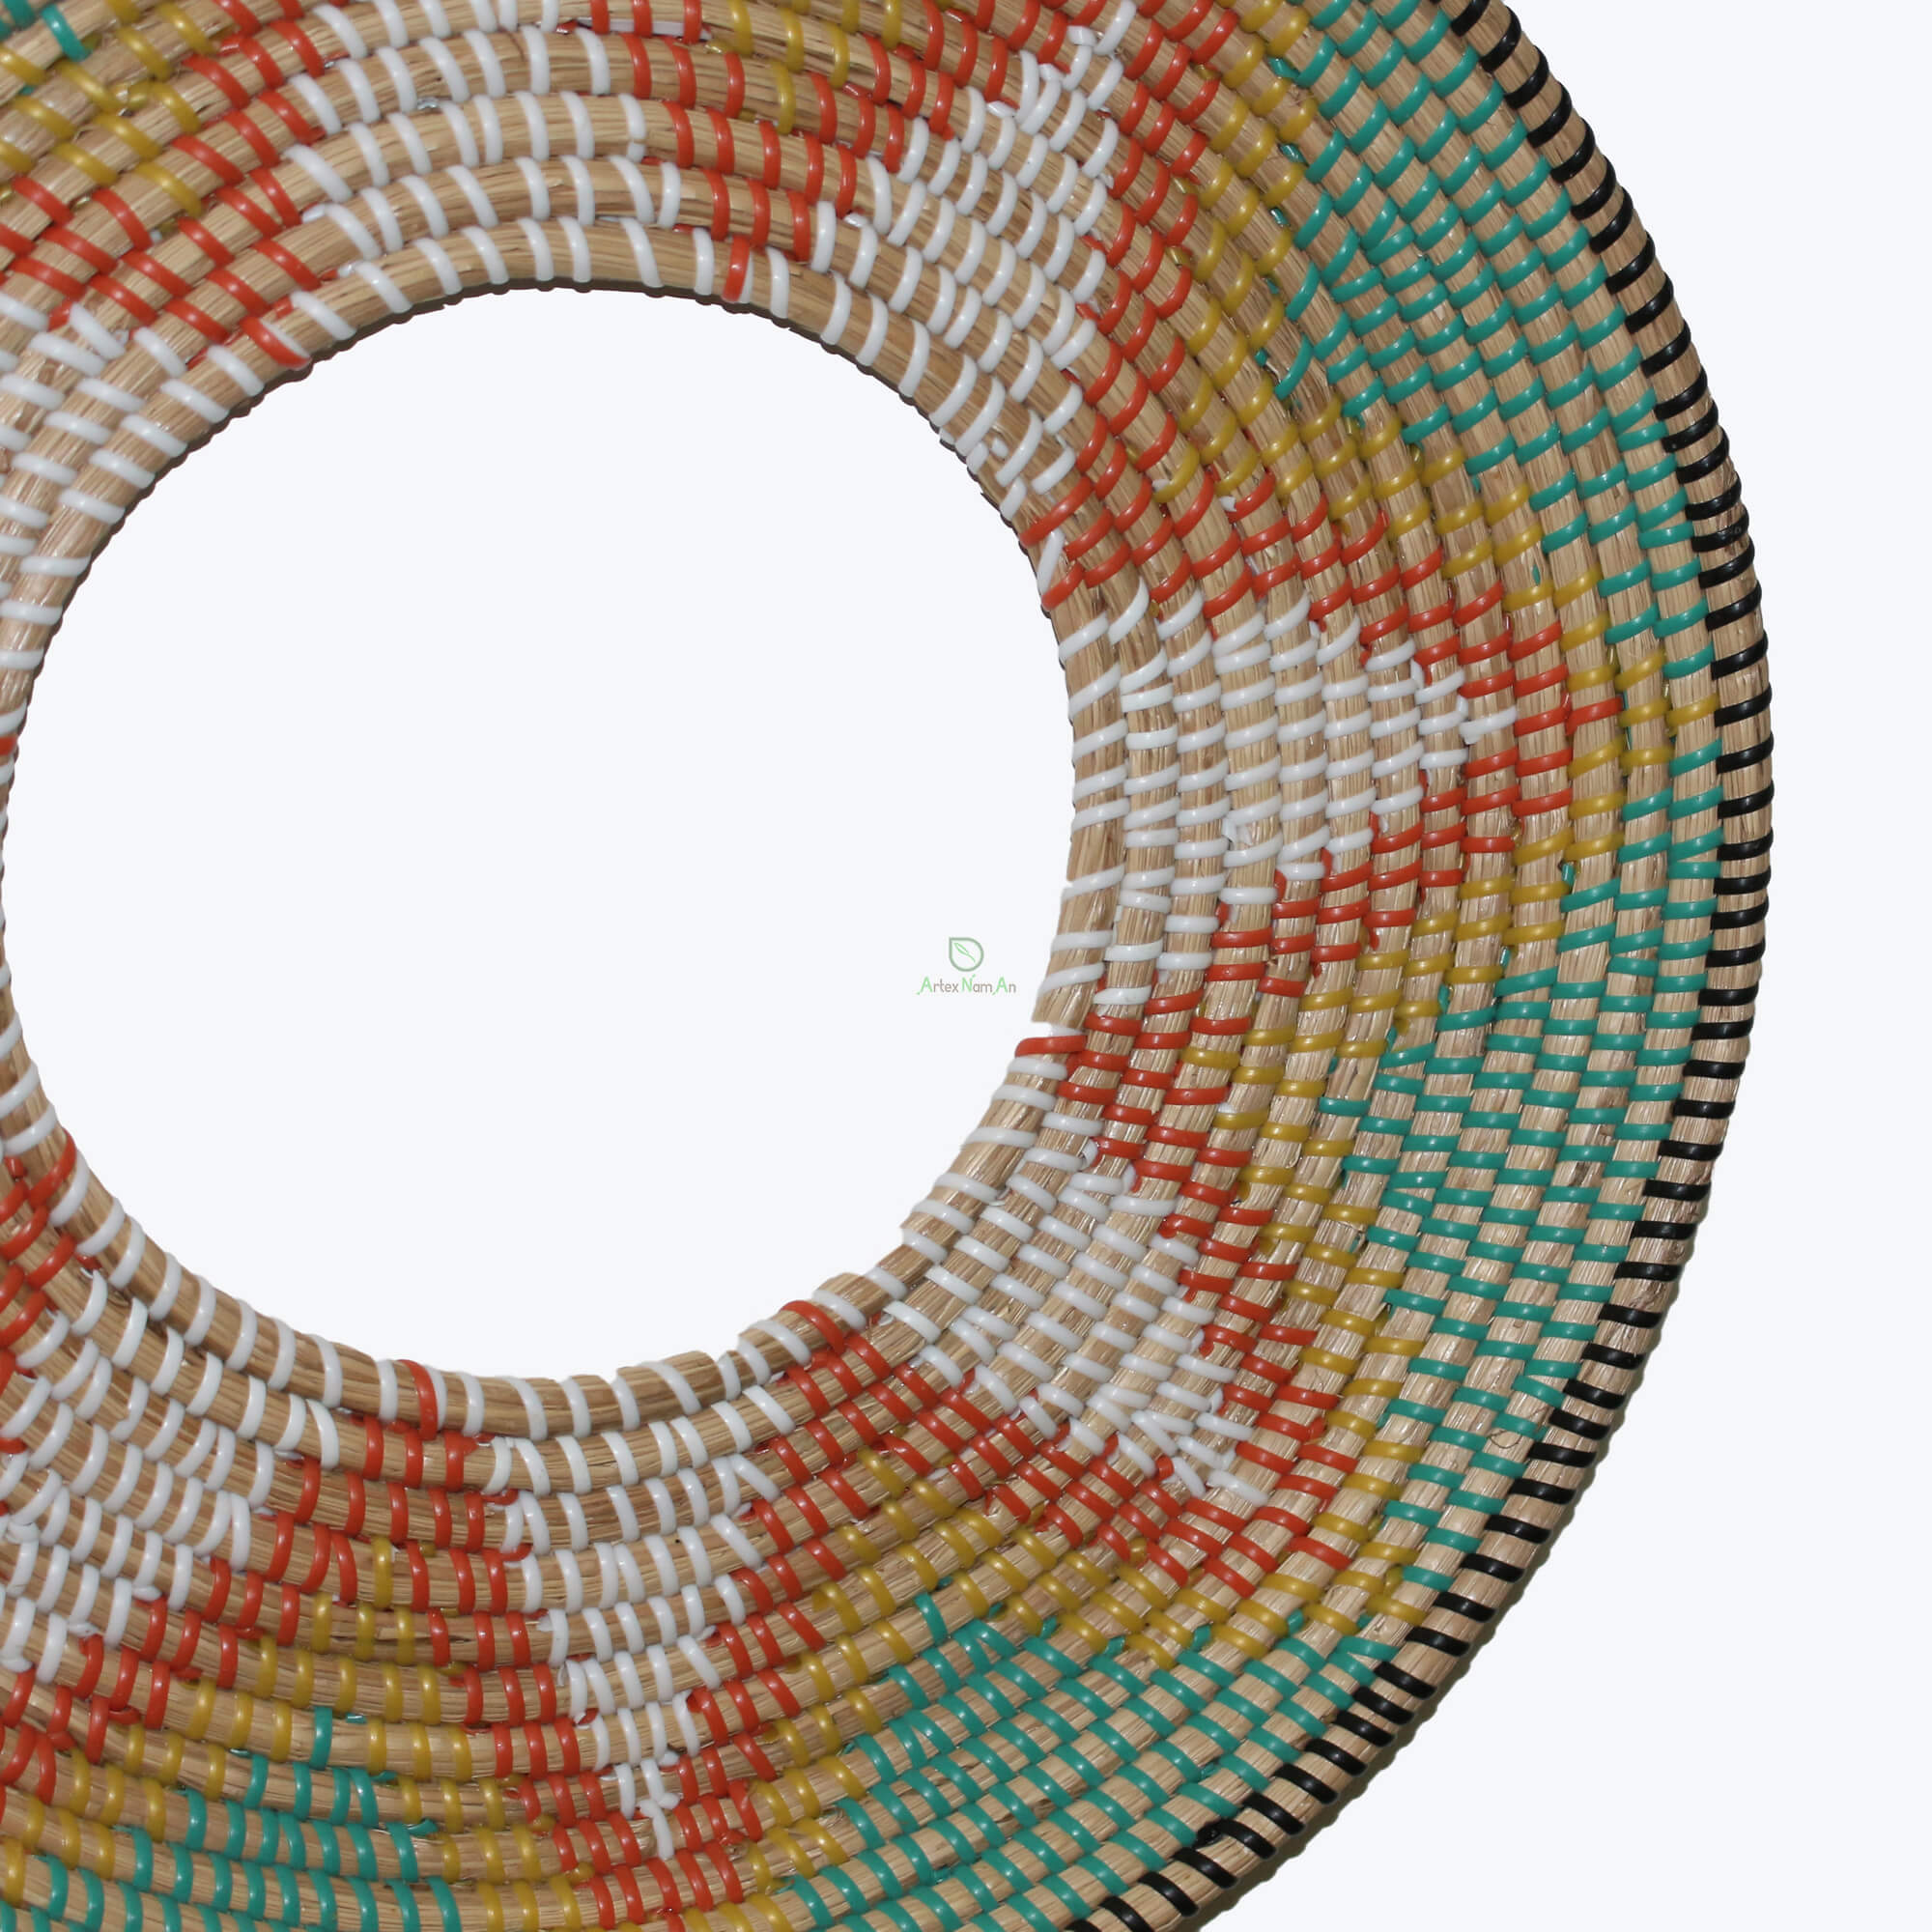 handmade round seagrass wall basket decor